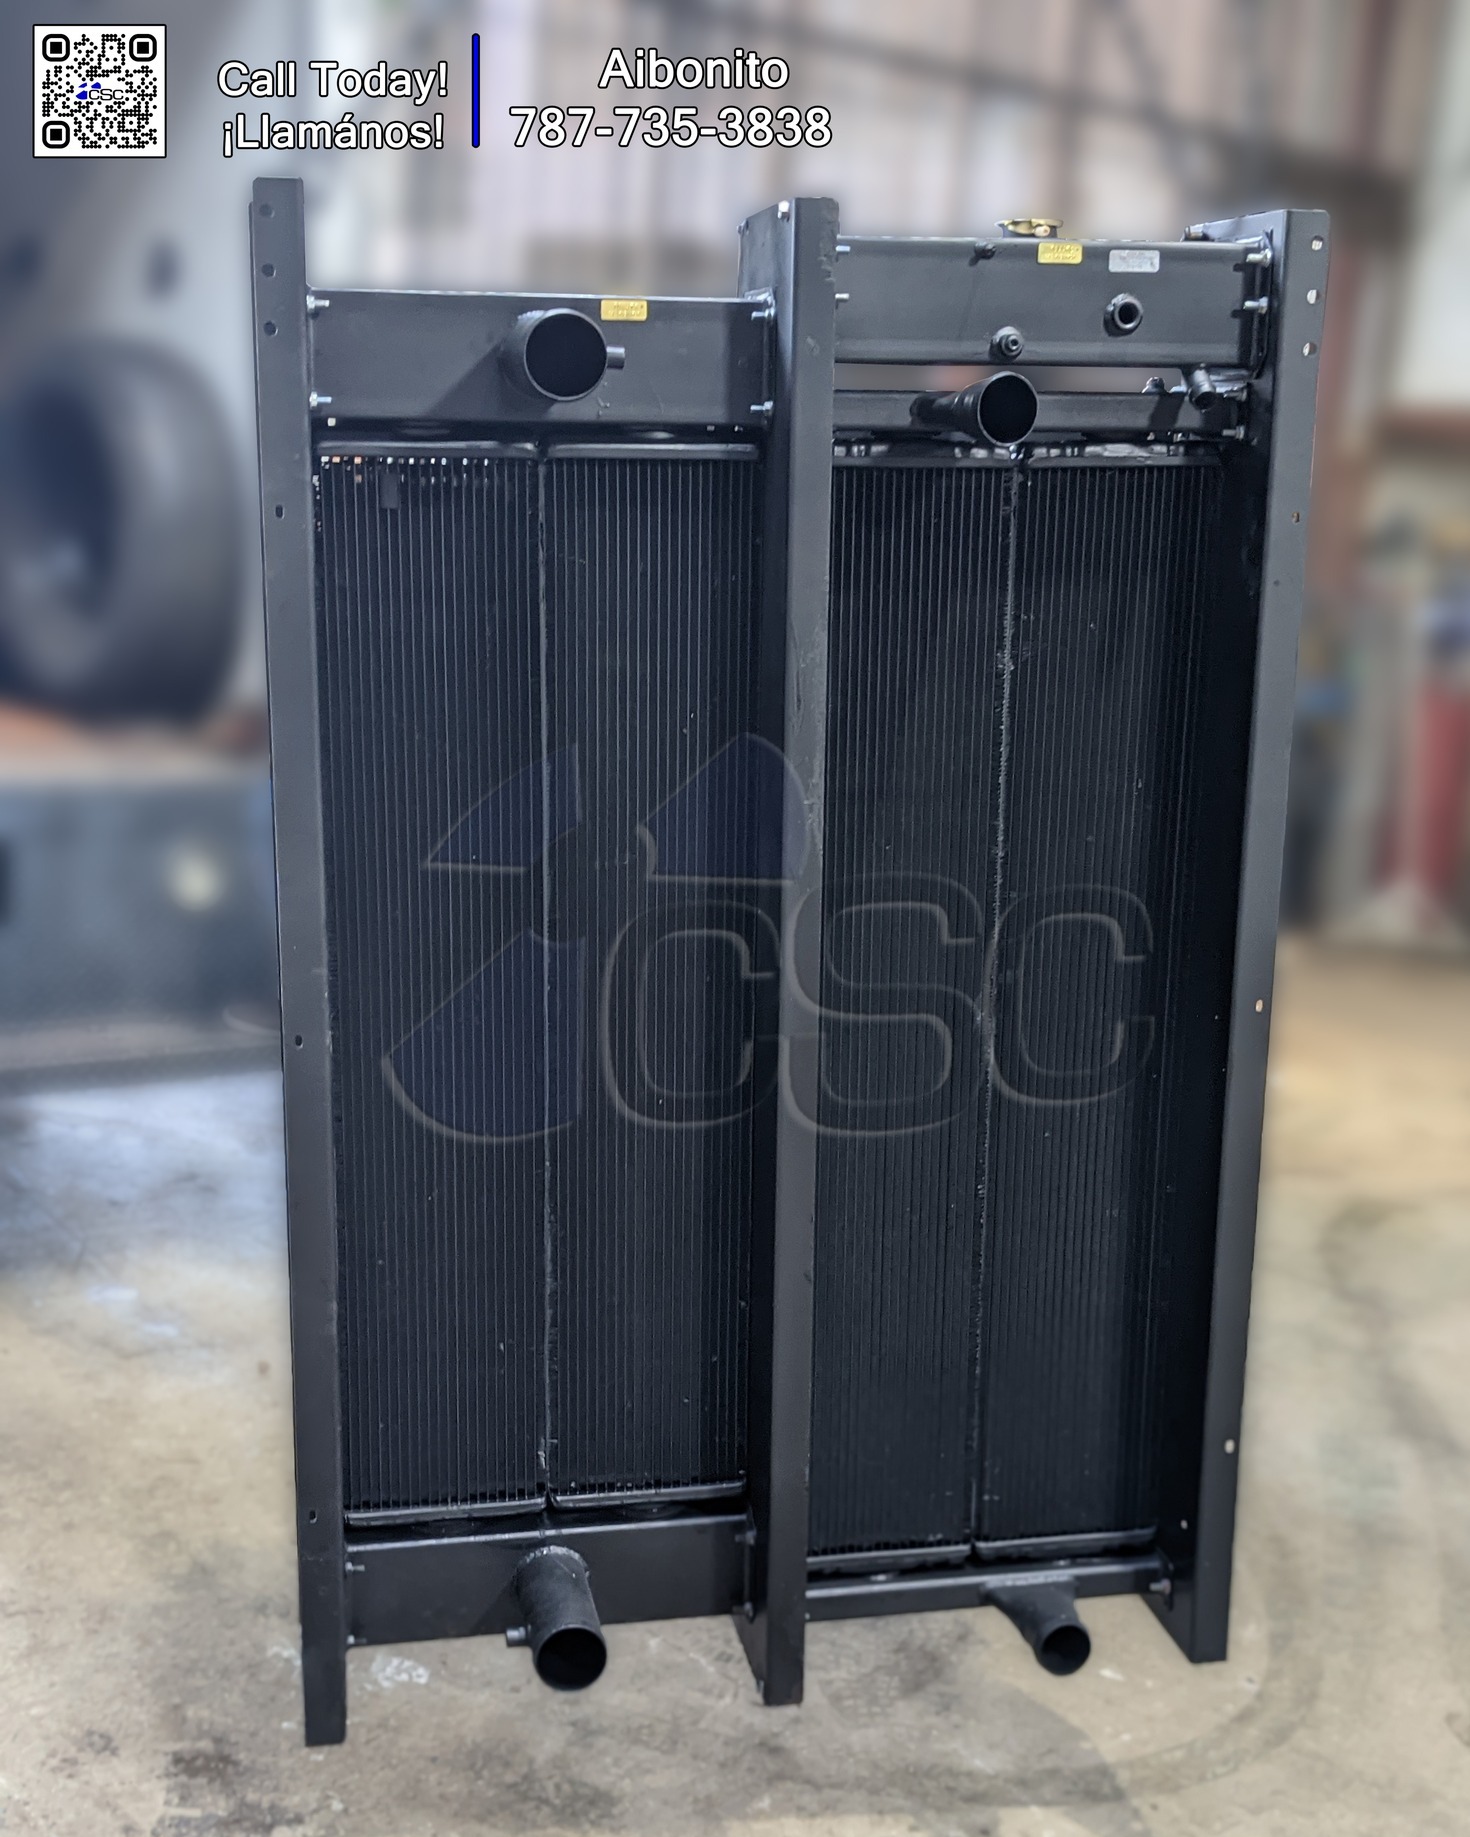 New Product! 403MR002 modular generator radiator / aftercooler combo unit